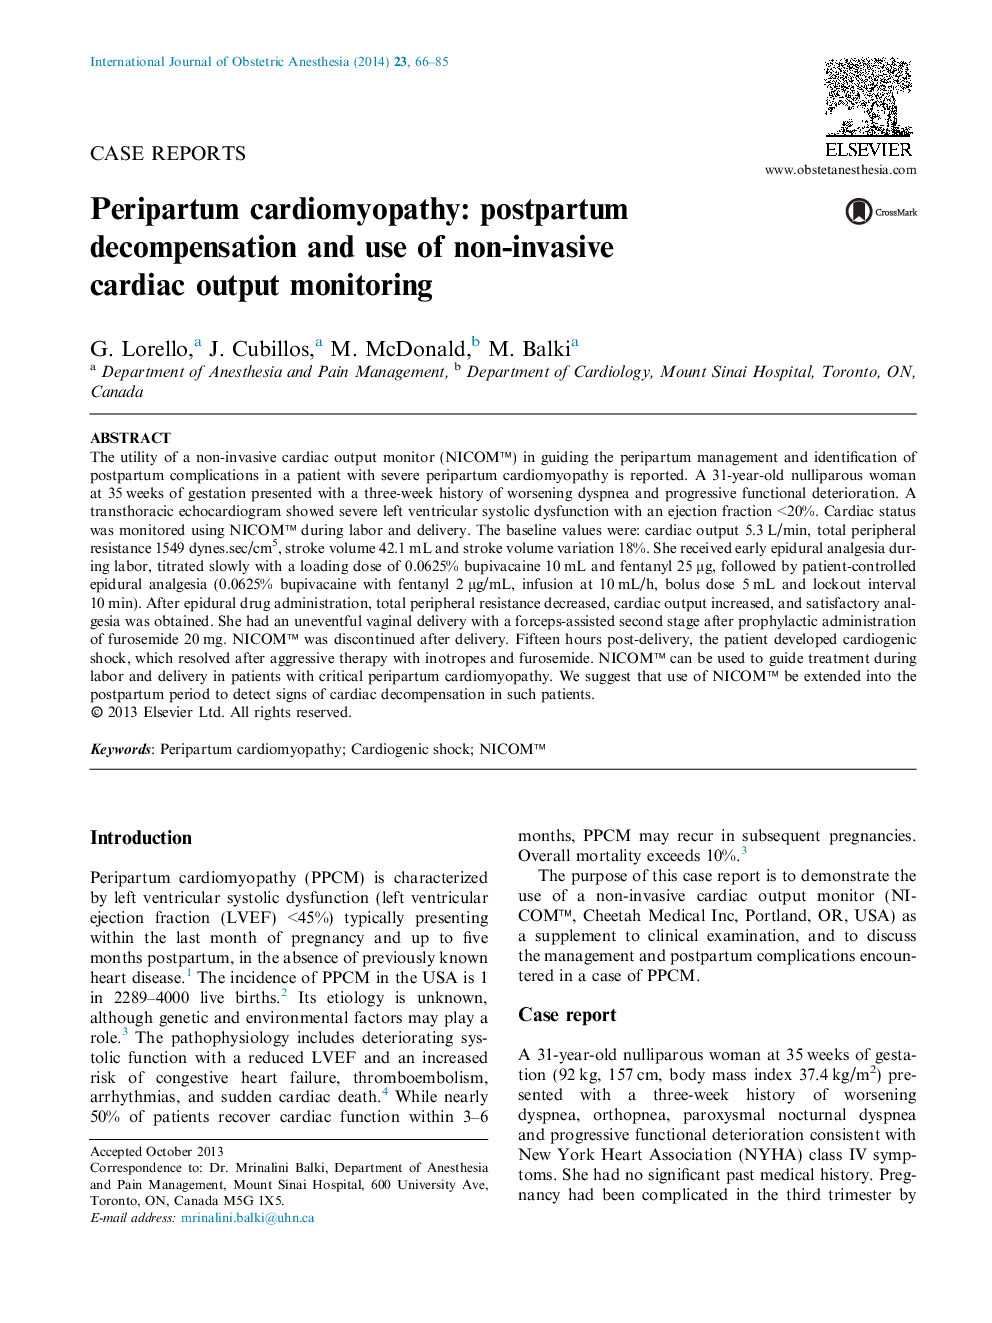 Peripartum cardiomyopathy: postpartum decompensation and use of non-invasive cardiac output monitoring